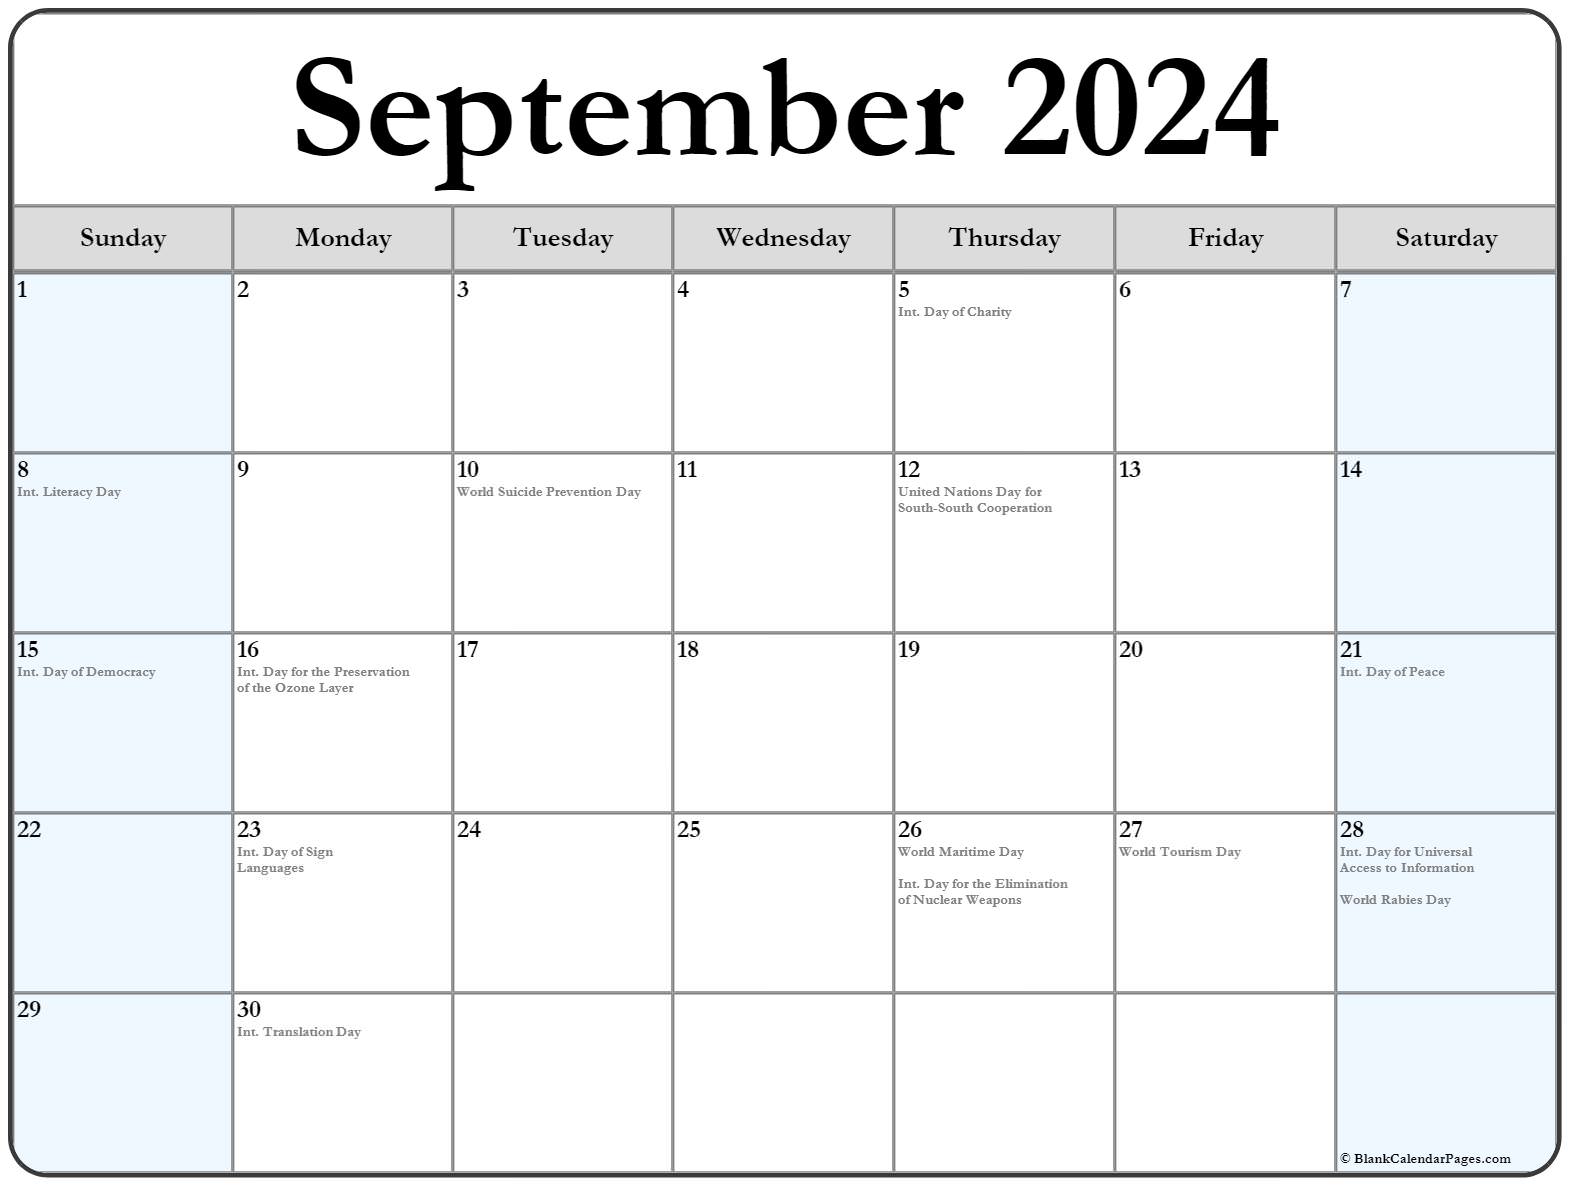 September 2020 calendar with holidays